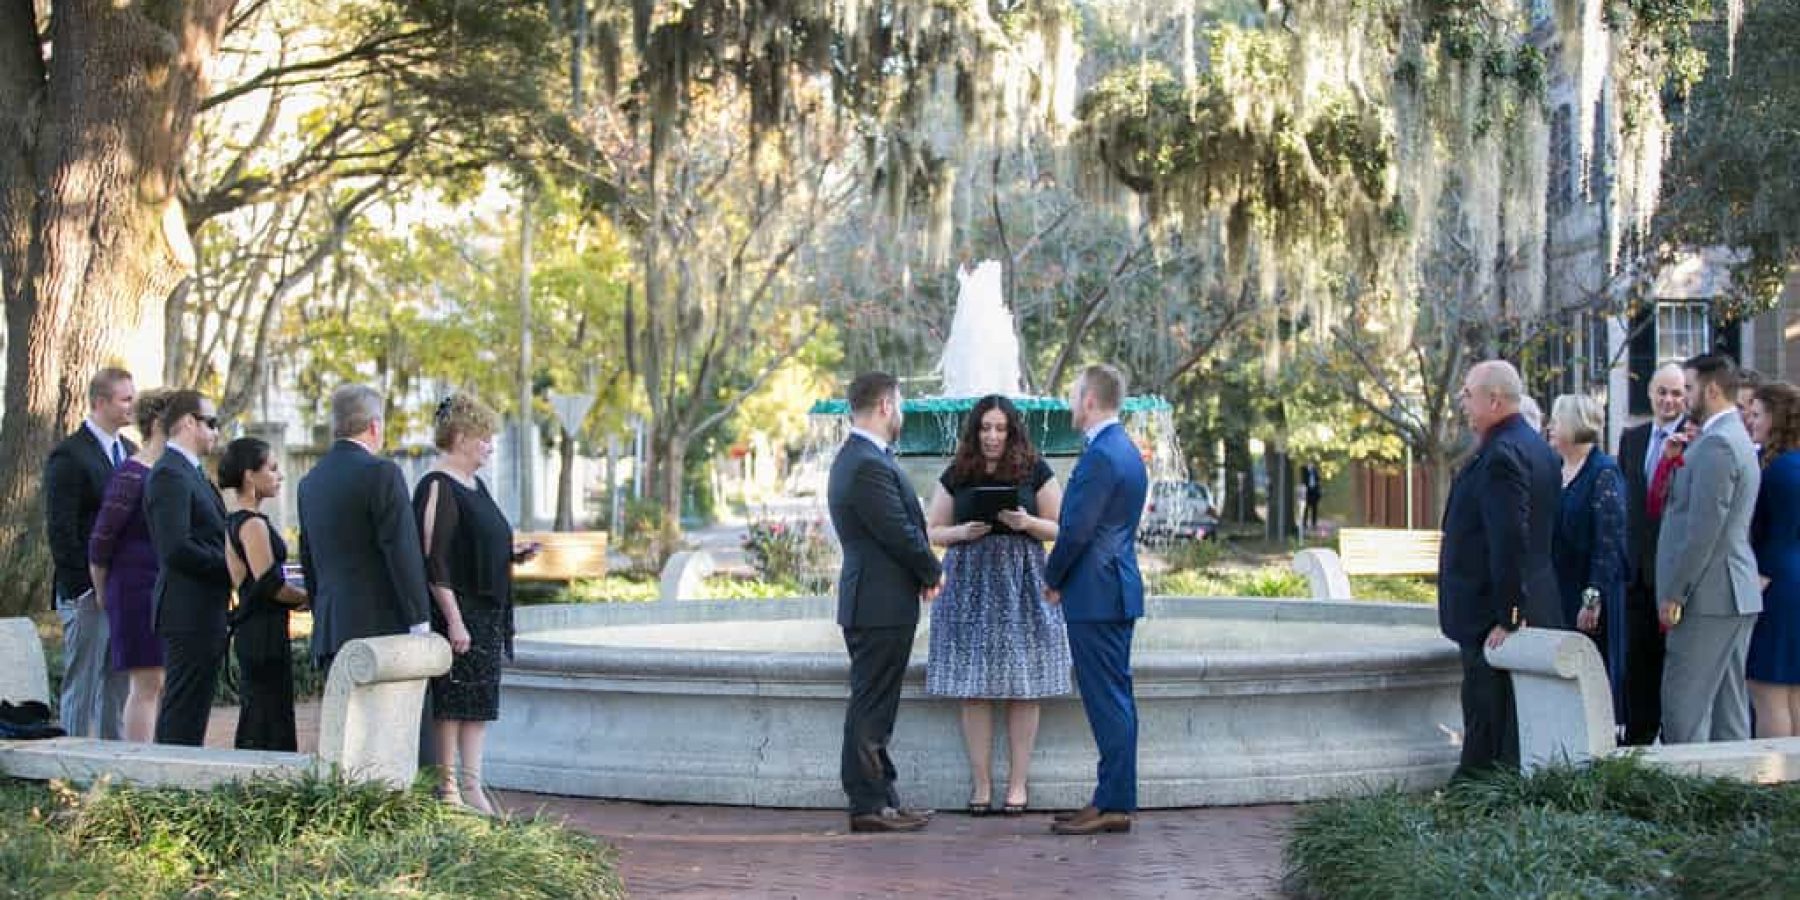 2015 Savannah Wedding Location Review, Part 1- Savannah Squares